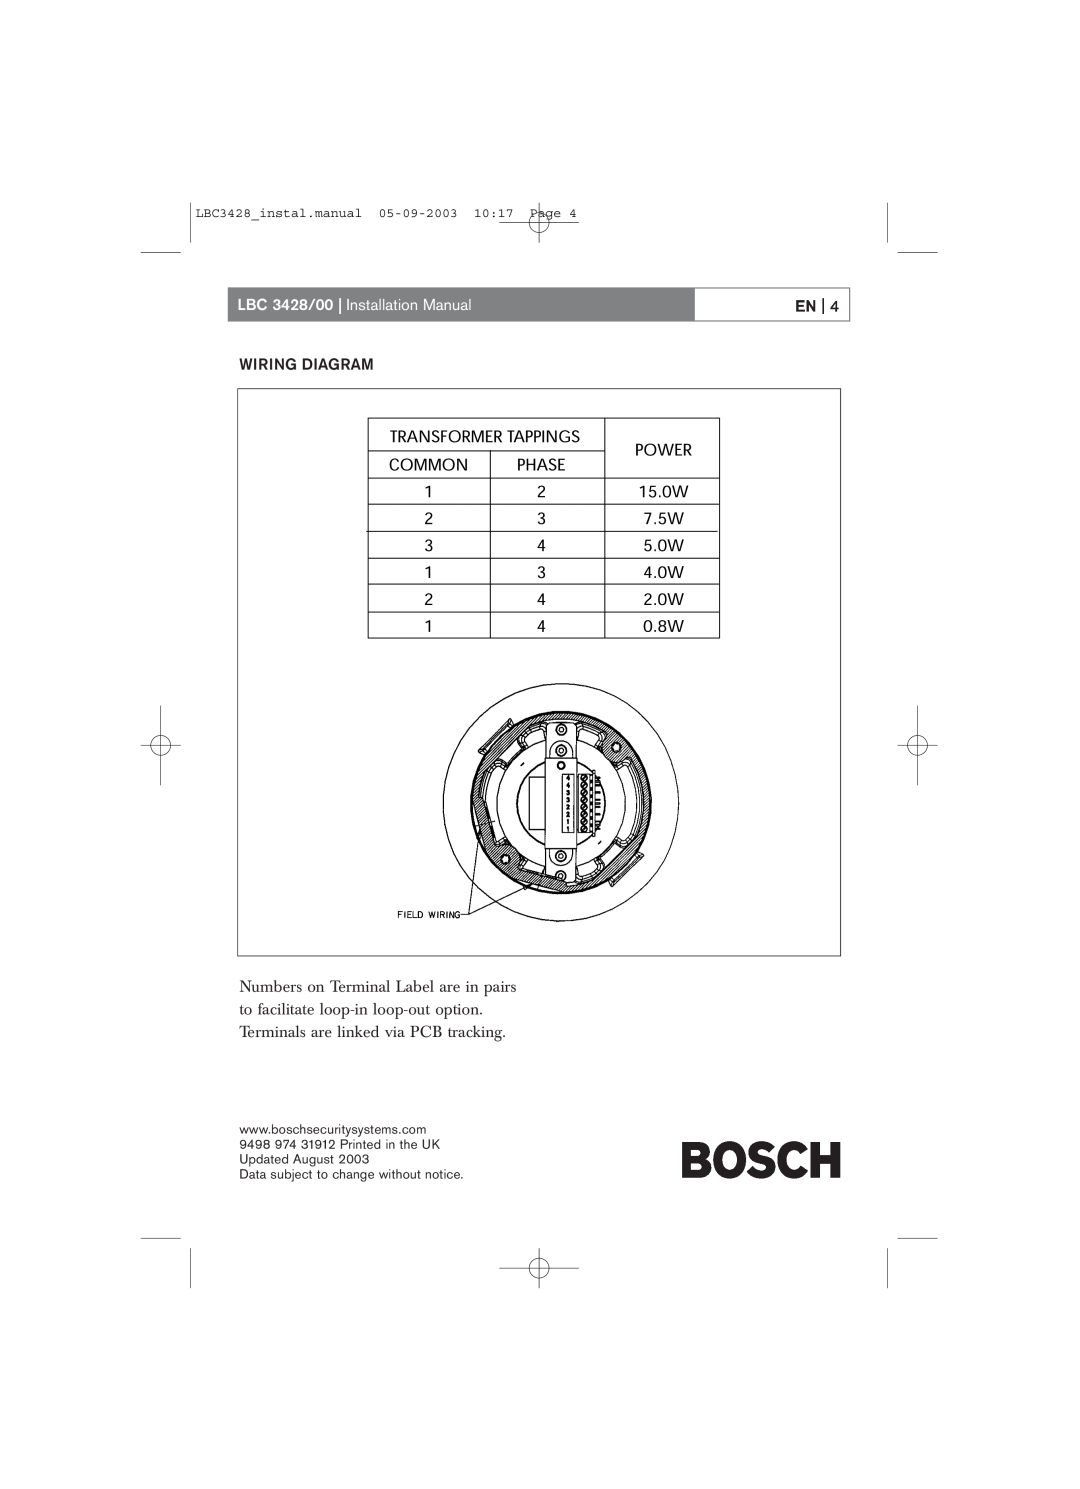 Bosch Appliances En, Wiring Diagram, LBC 3428/00 Installation Manual, LBC3428 instal.manual 05-09-200310 17 Page 